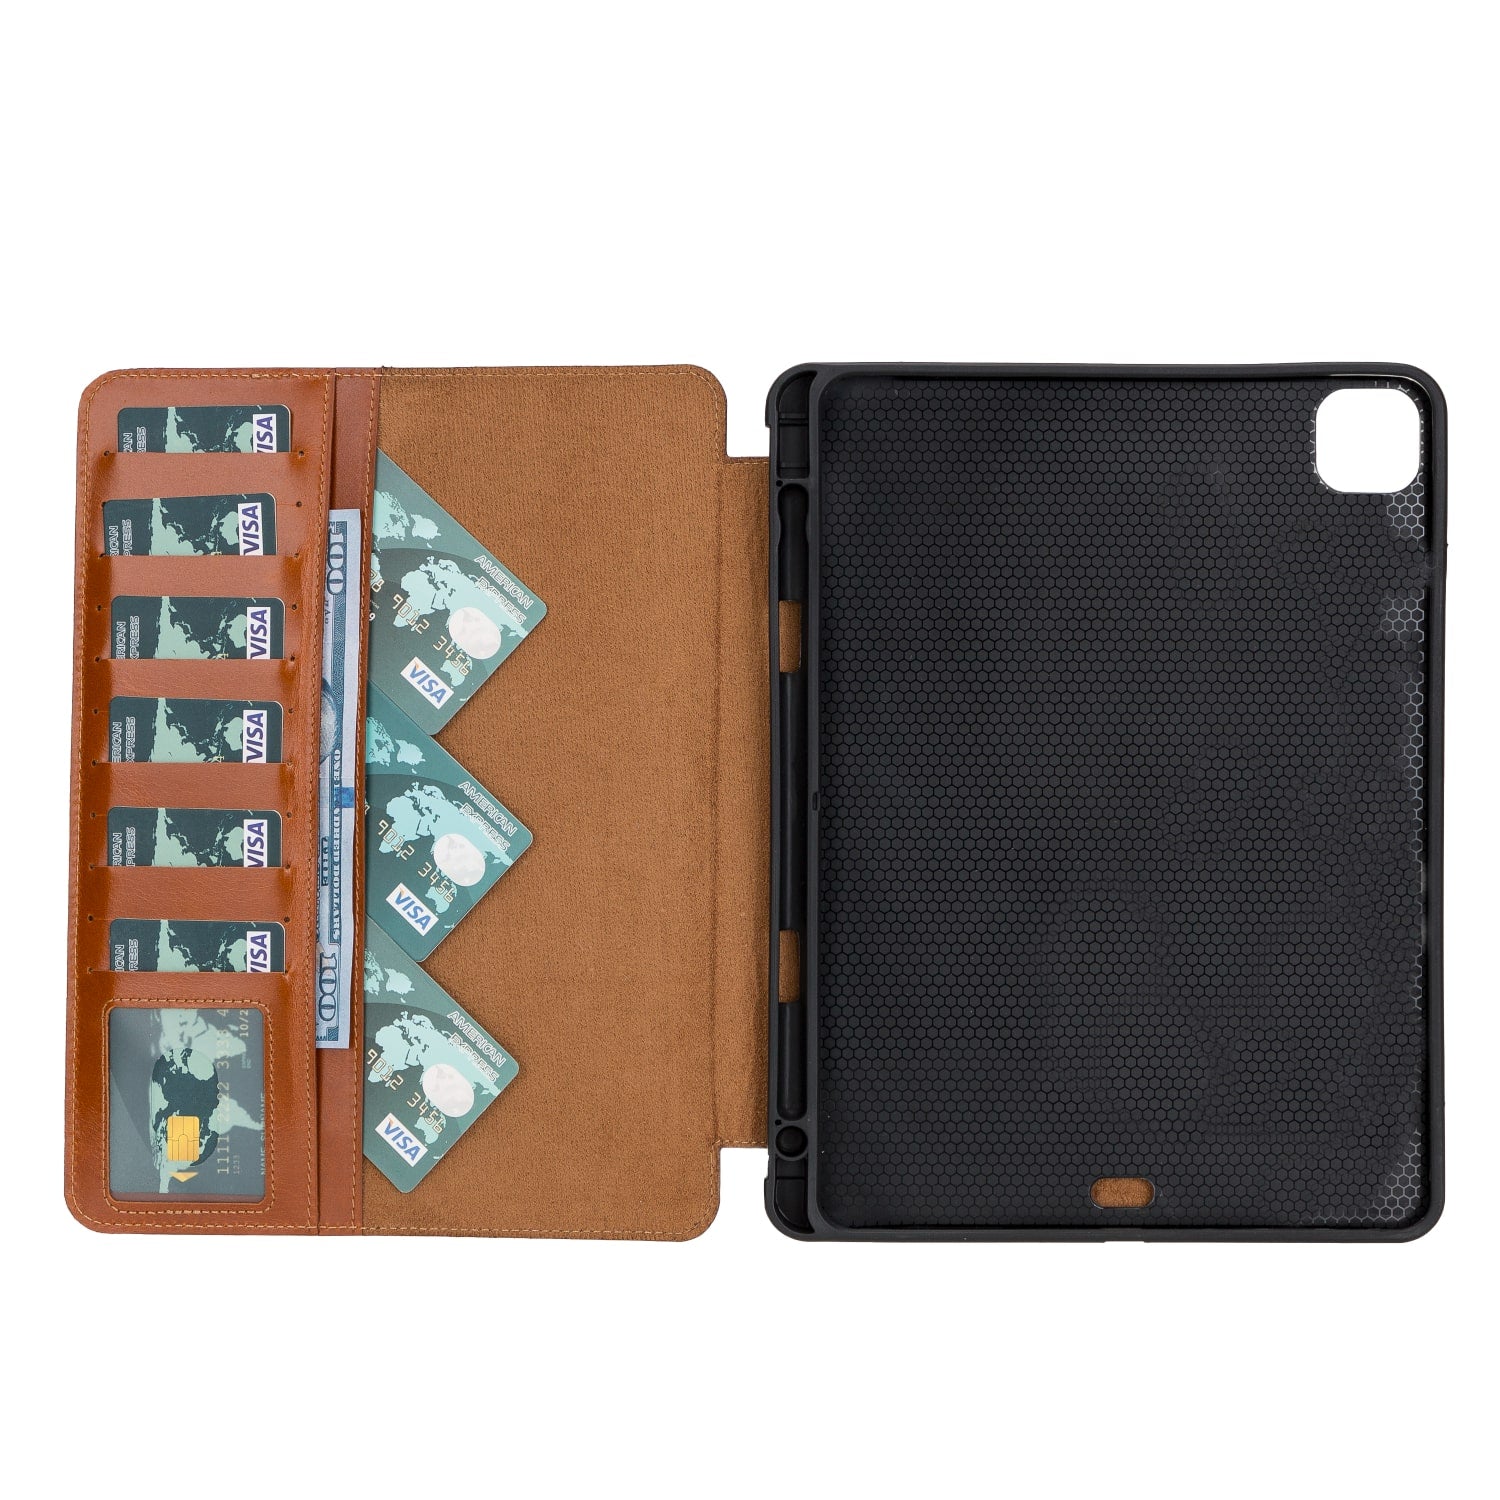 Brown Leather iPad Pro 11 Inc Smart Folio Case with Apple Pen Holder - Bomonti - 2